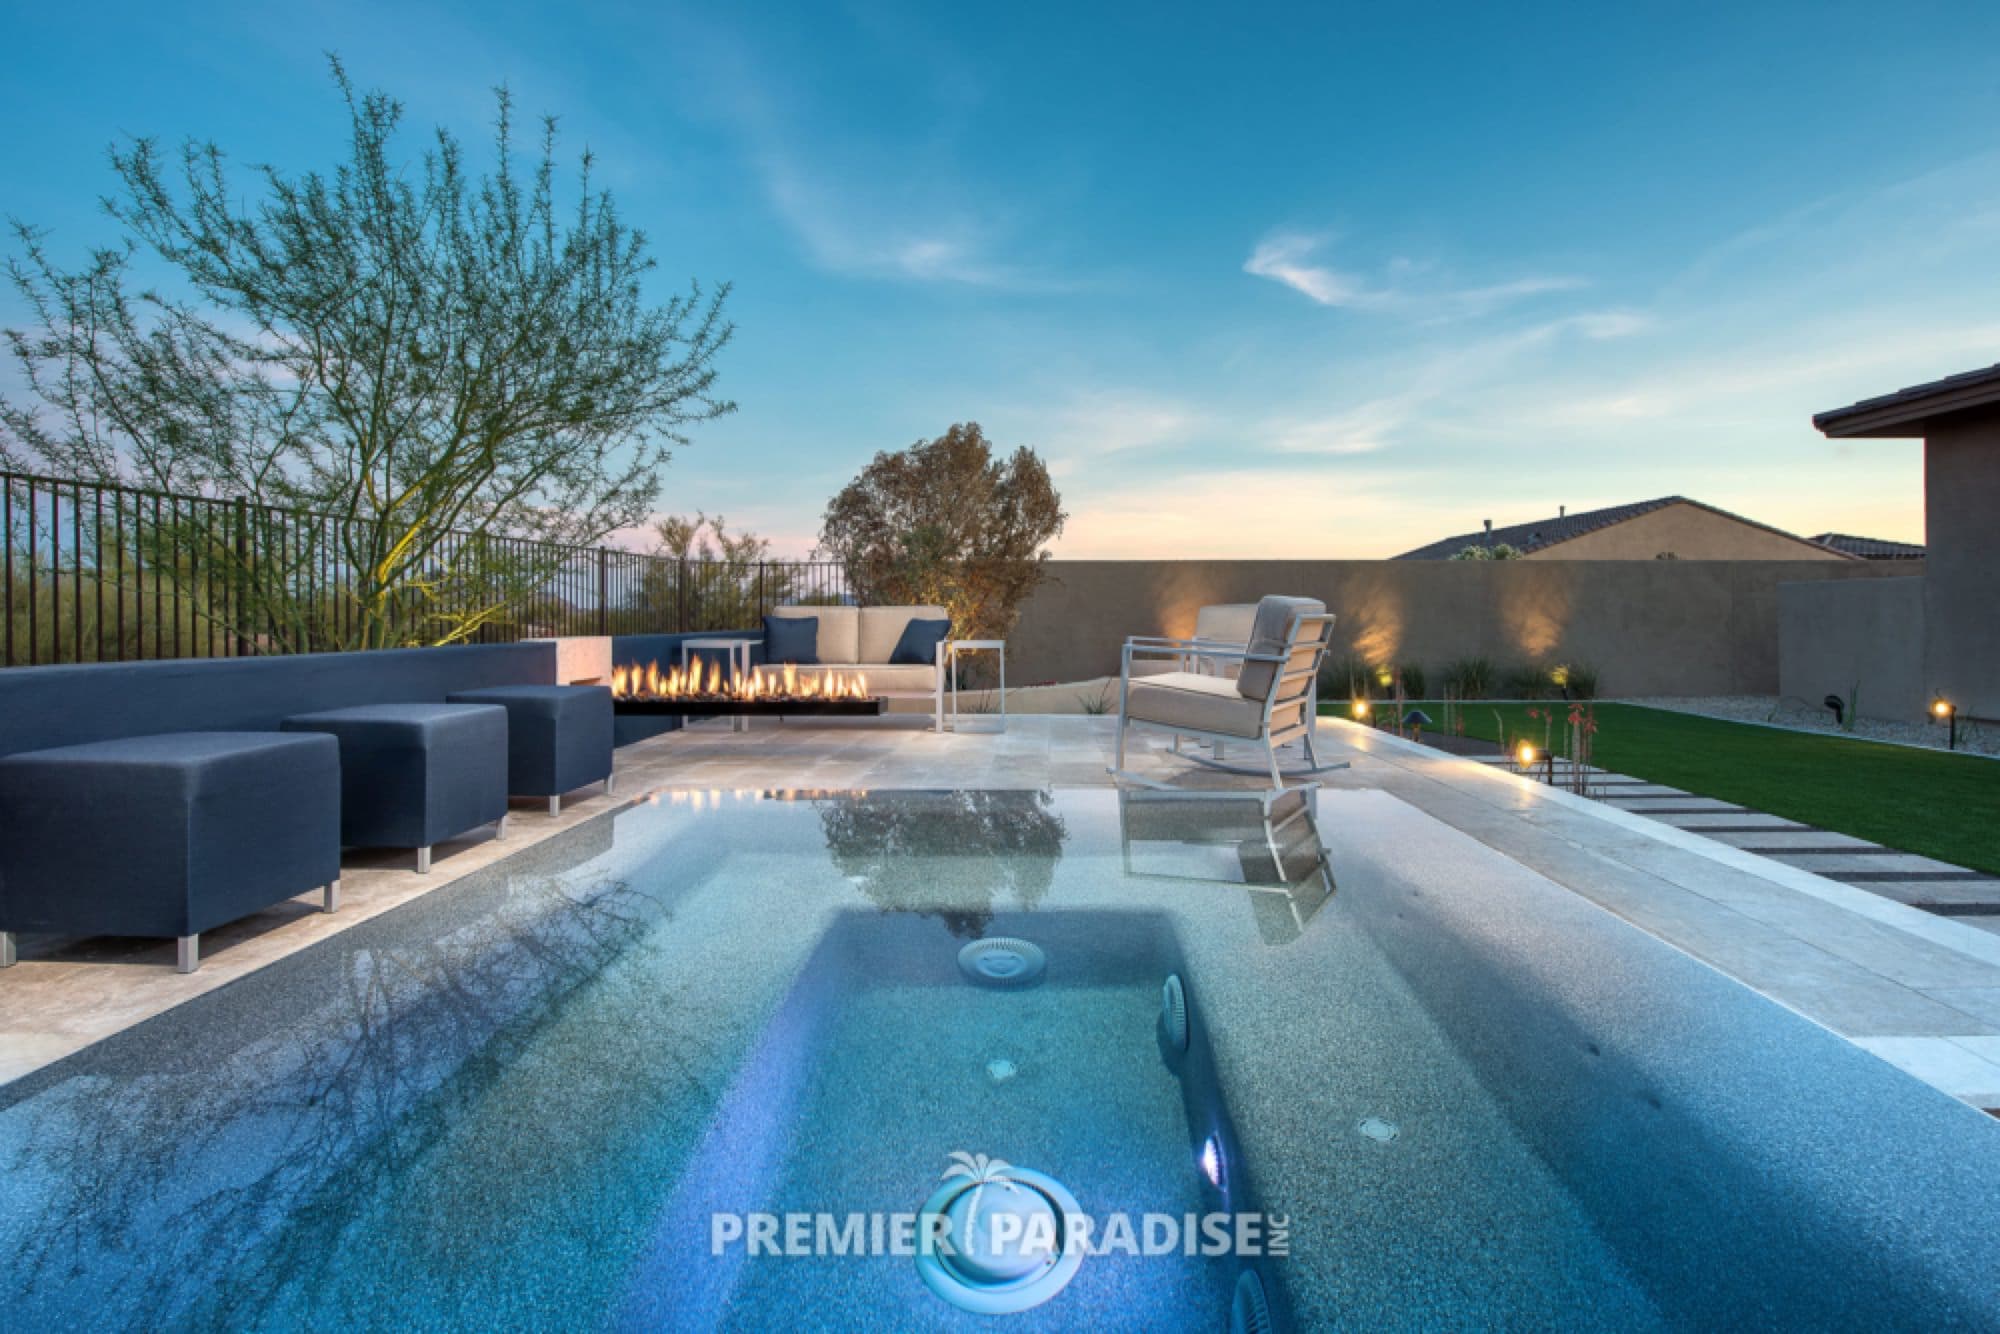 vanishing edge spa bocce court design custom pool builder arizona premier paradise inc 3 watermarked